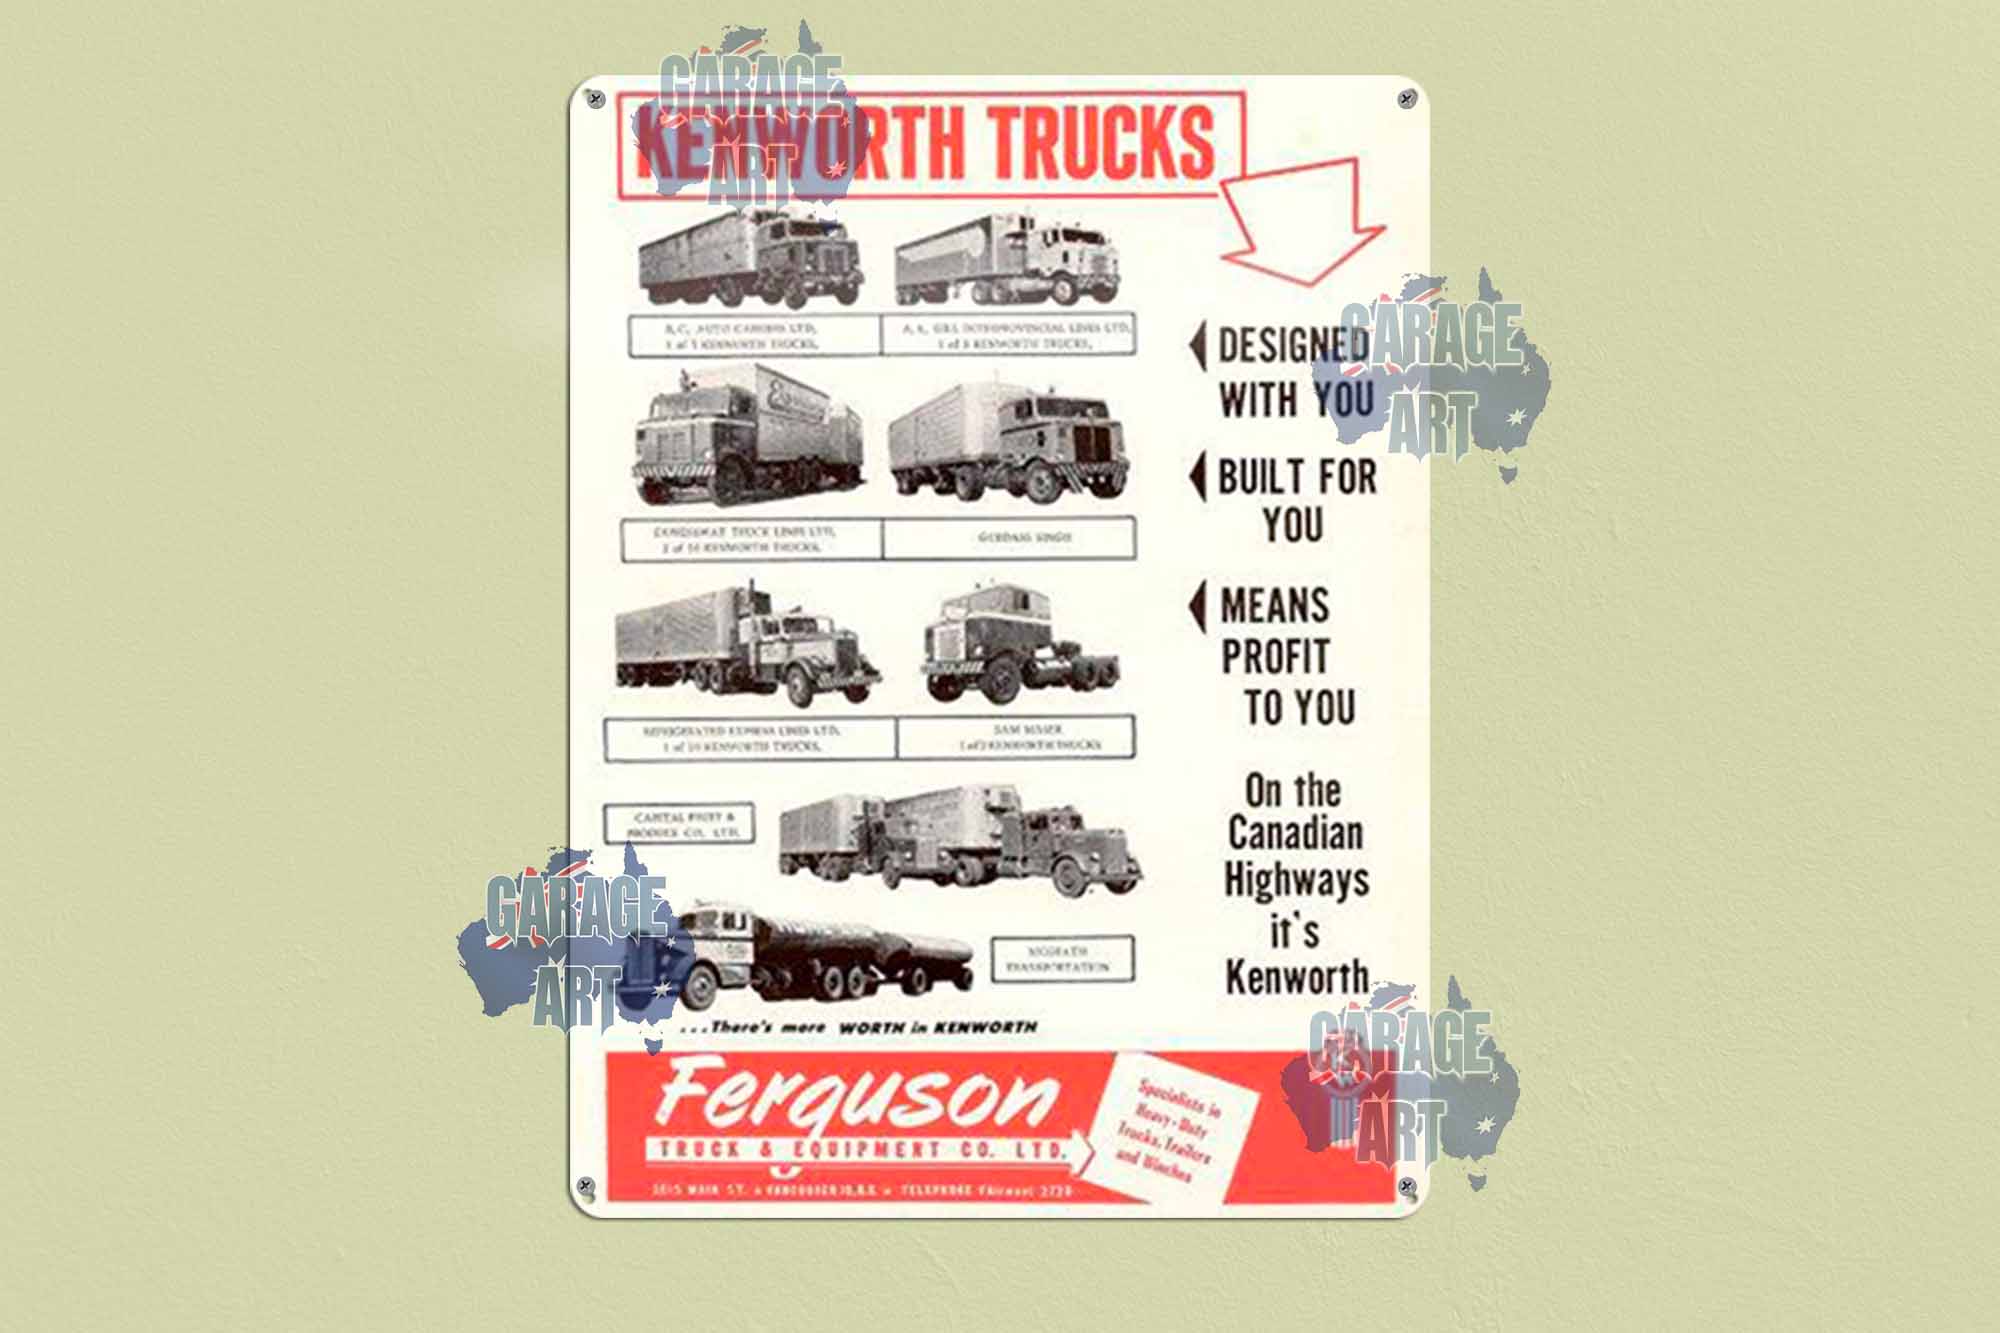 Kenworth Trucks and Ferguson for More Profit  Tin Sign freeshipping - garageartaustralia